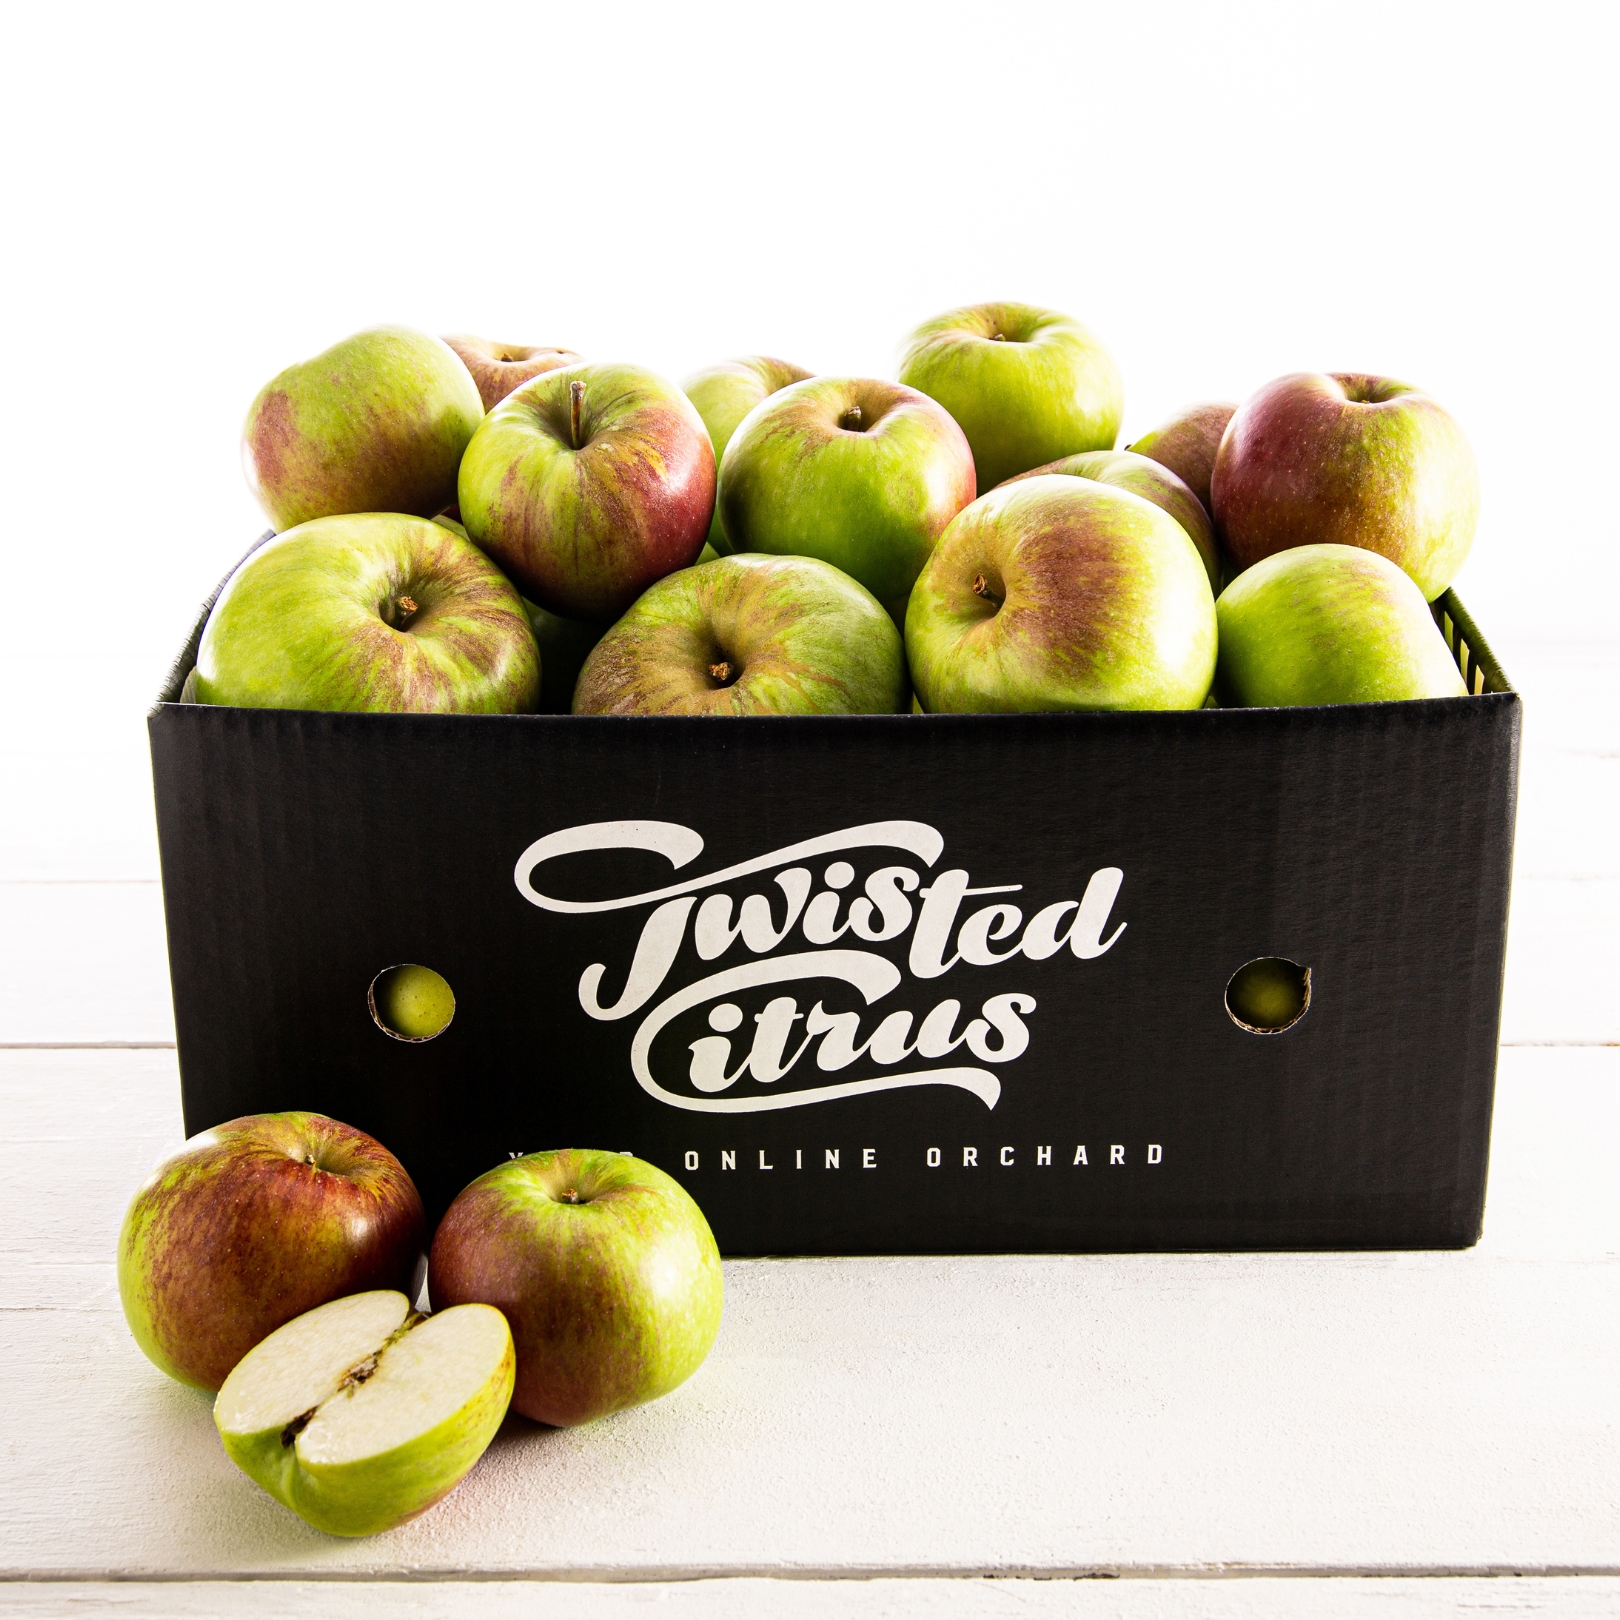 Buy Apples - Ballarat Online NZ